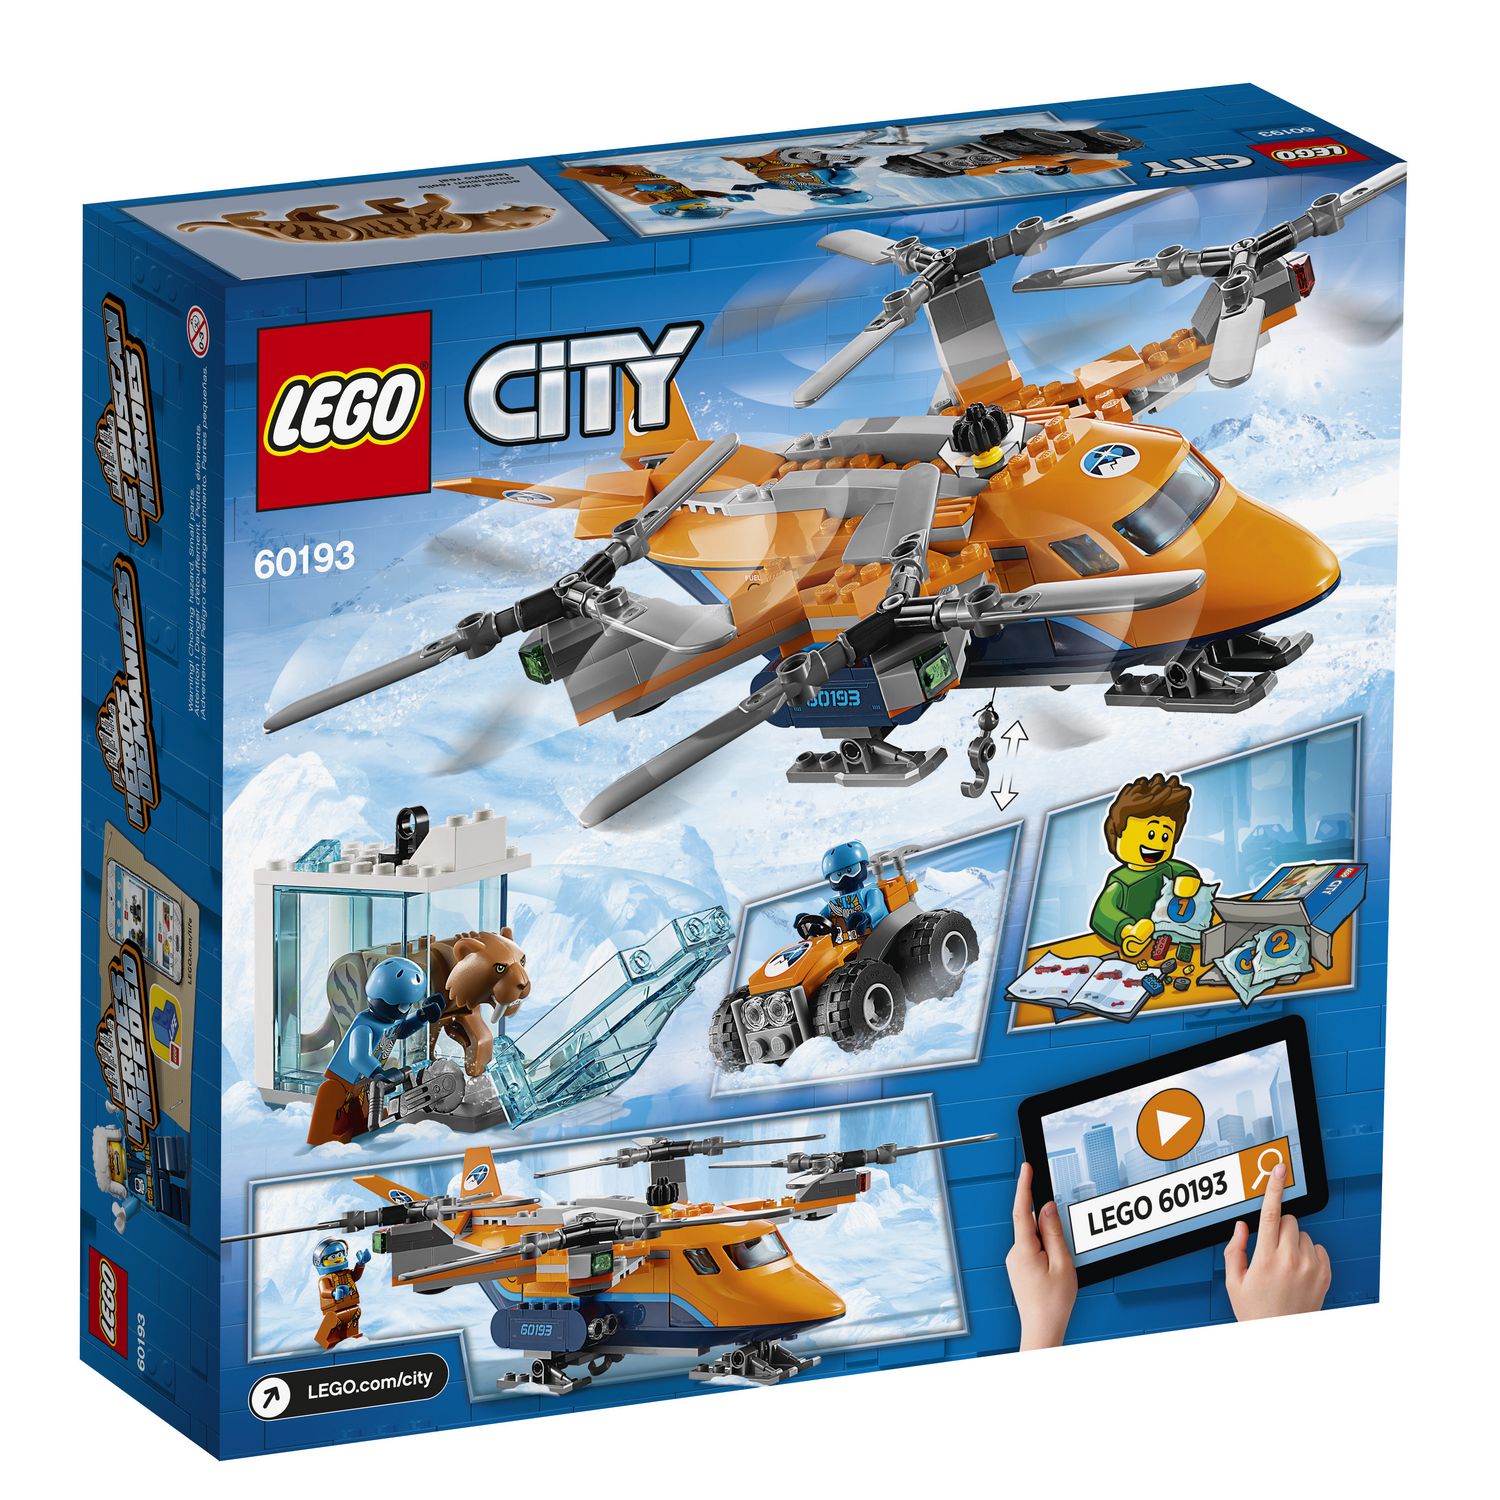 2017 City Set 60147 : r/lego